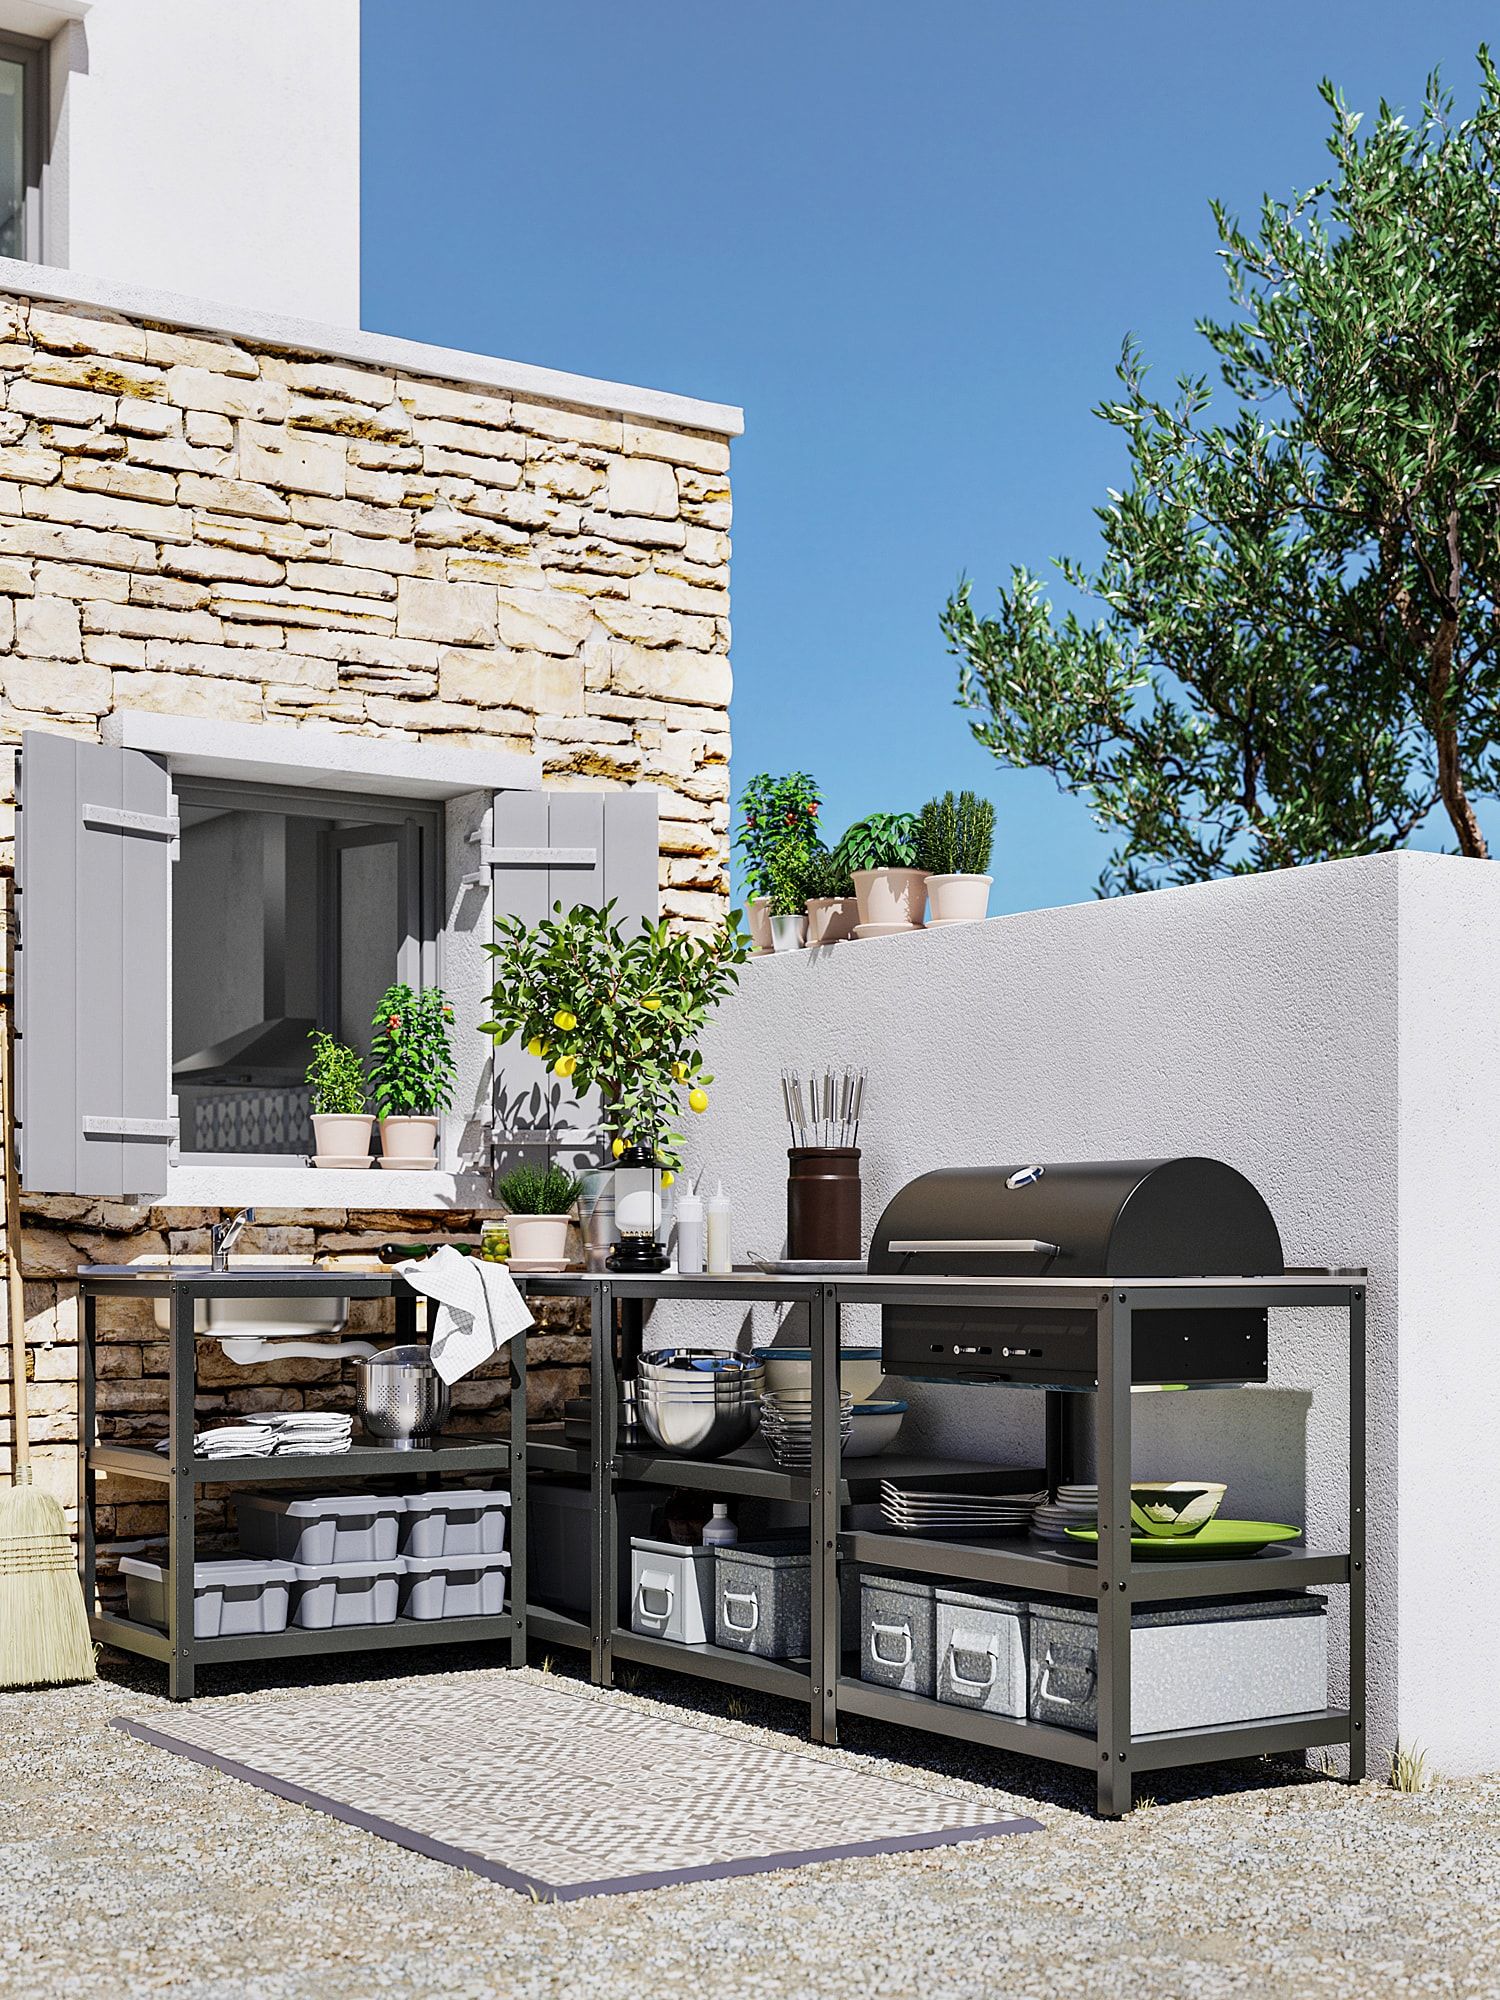 Modular outdoor kitchen – an amazing
  thing